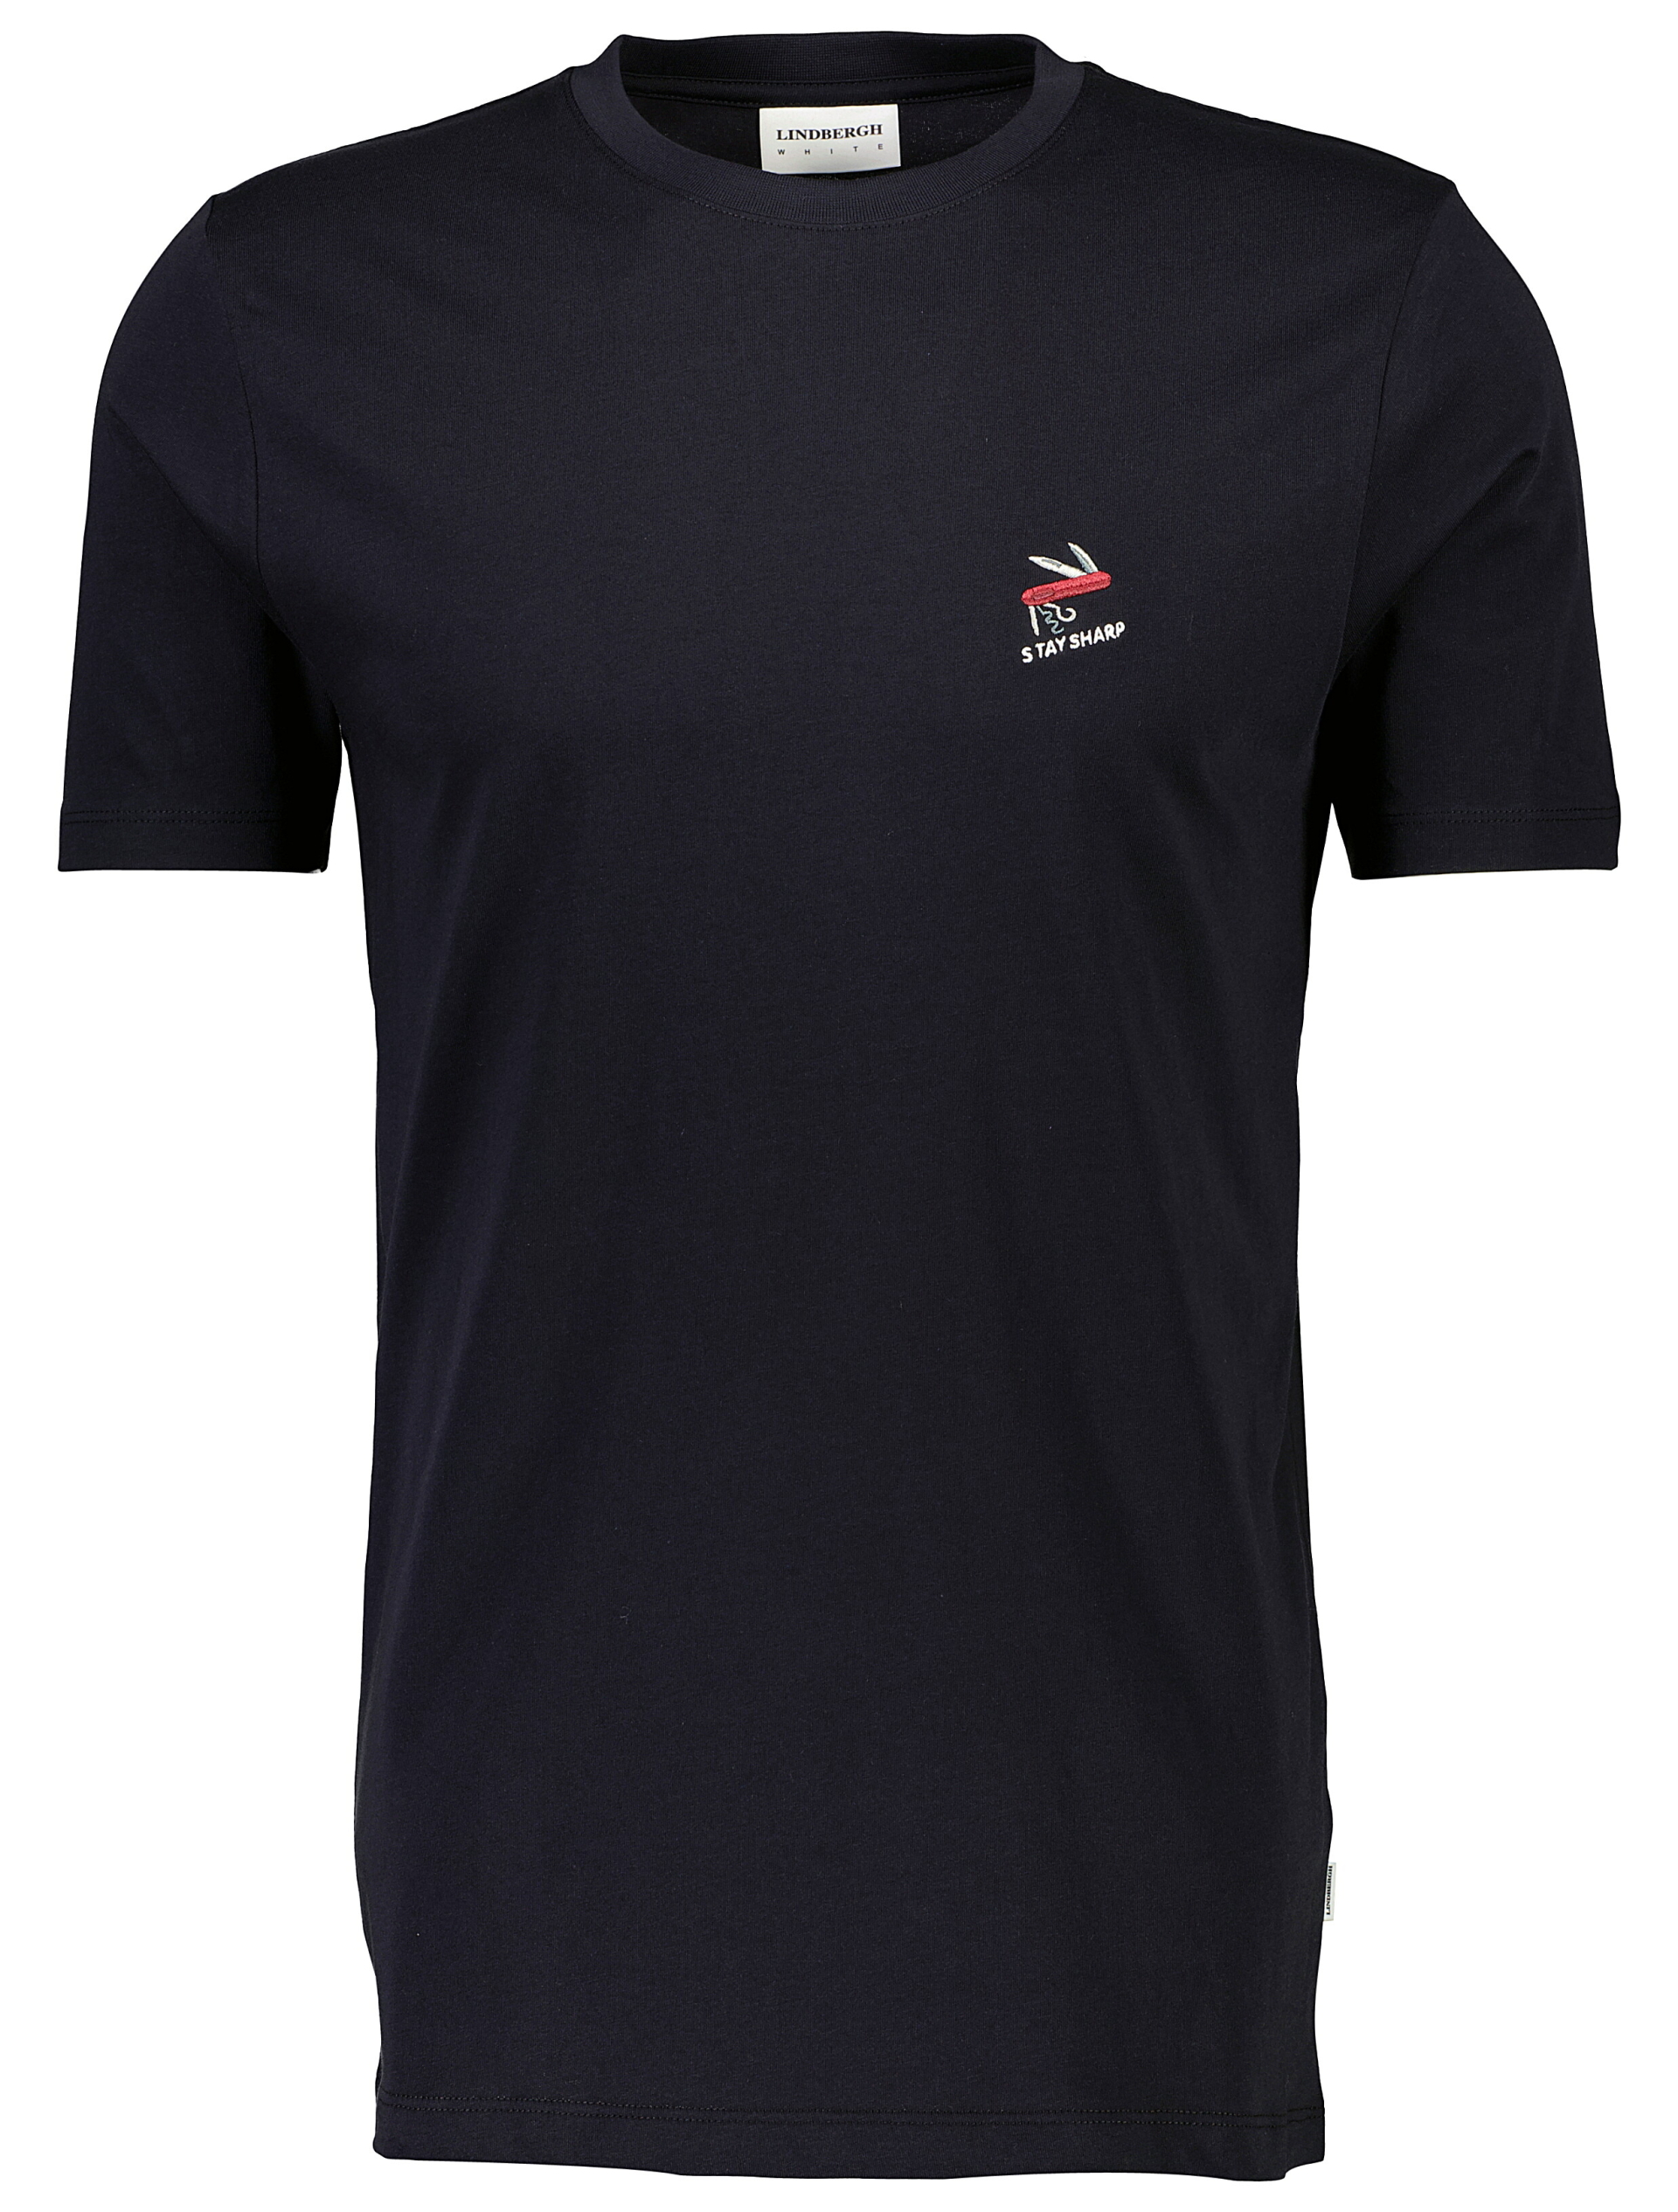 Lindbergh T-shirt sort / true black